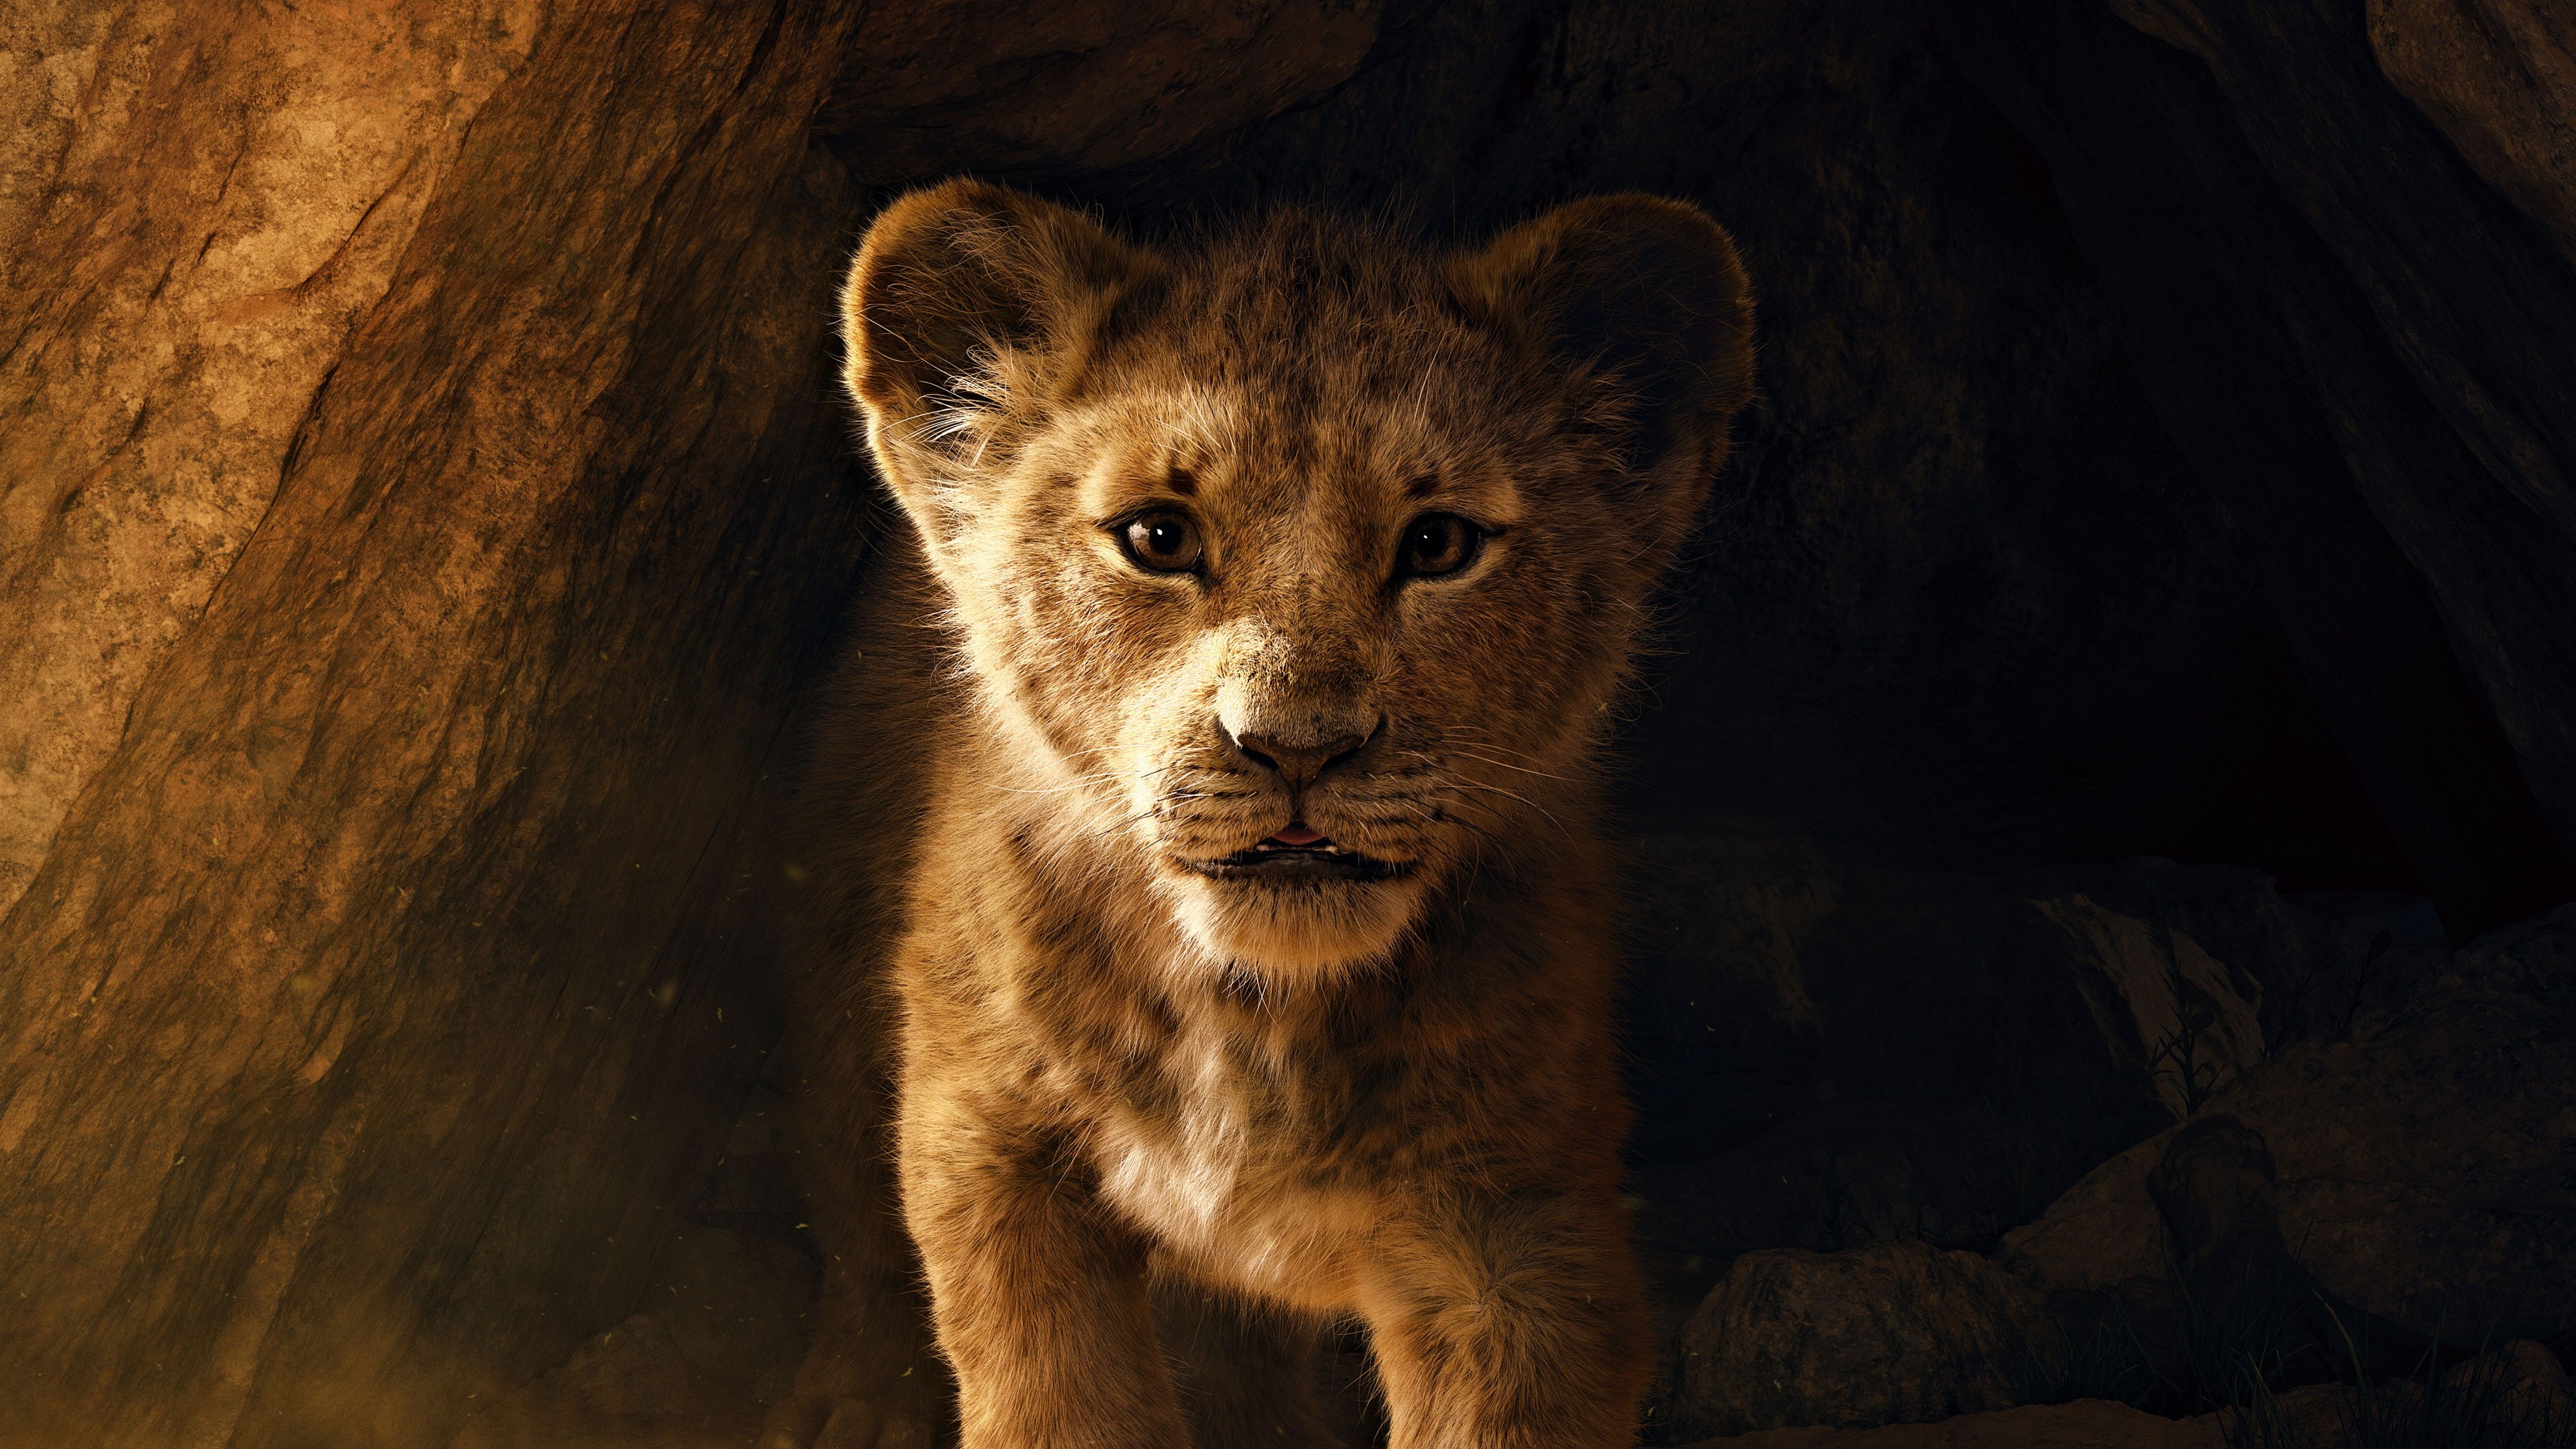 The Lion King Wallpaper 4K, Simba, Lion cub, 5K, Movies